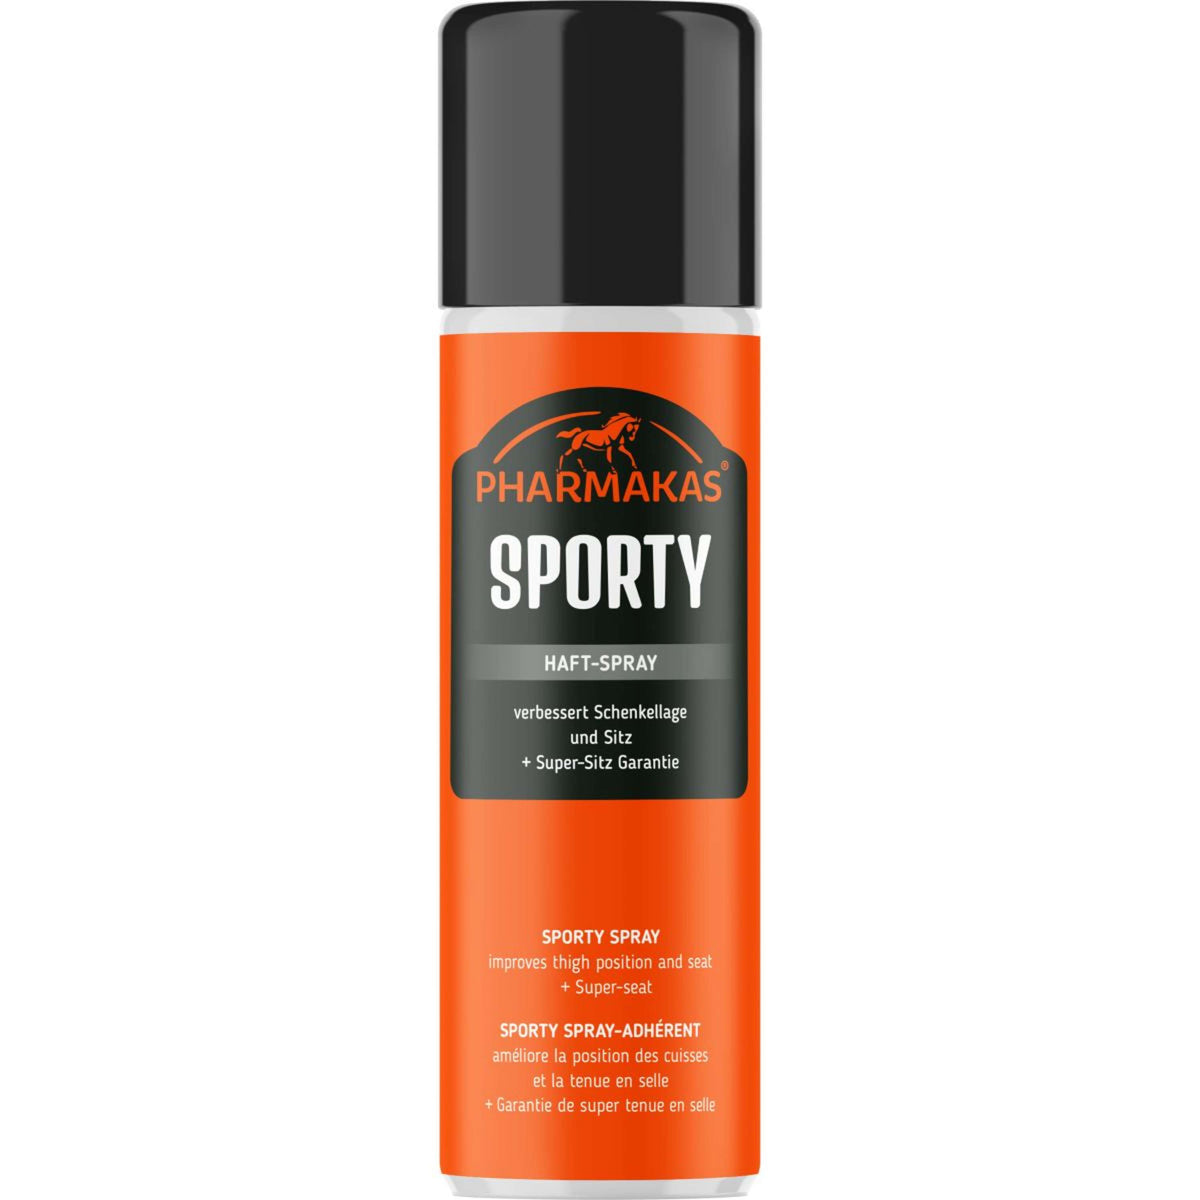 Pharmakas Sporty Haft-spray